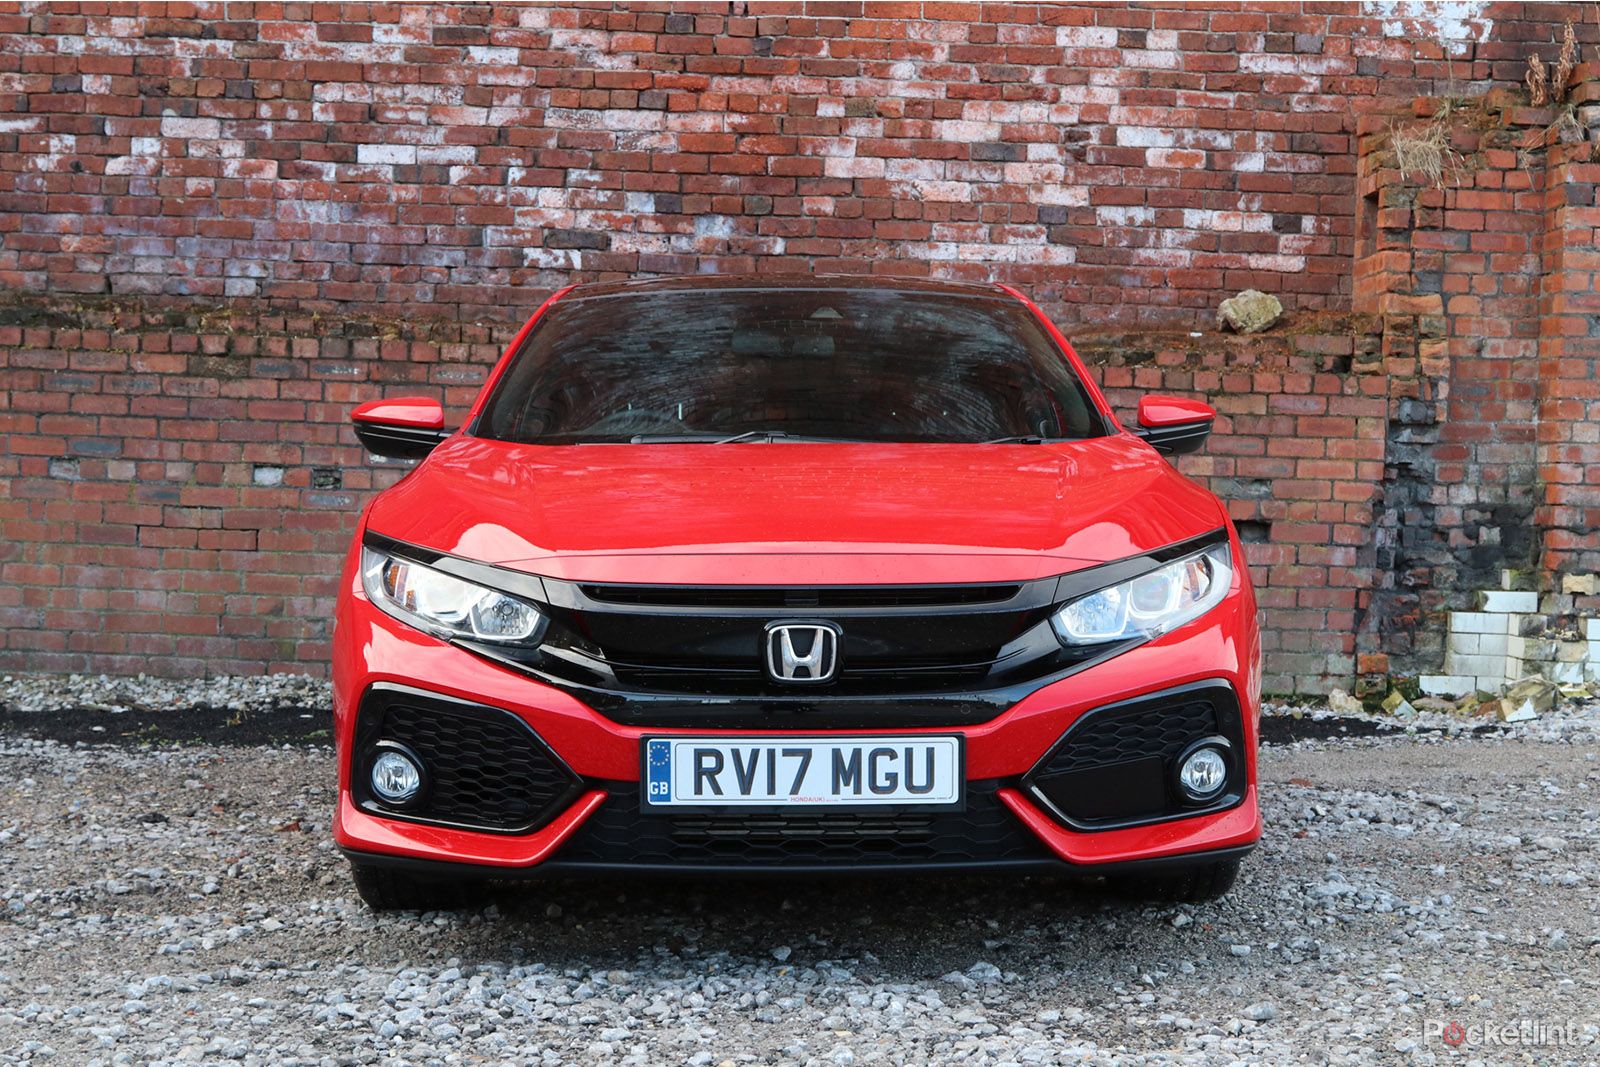 Honda Civic 2017 review image 2